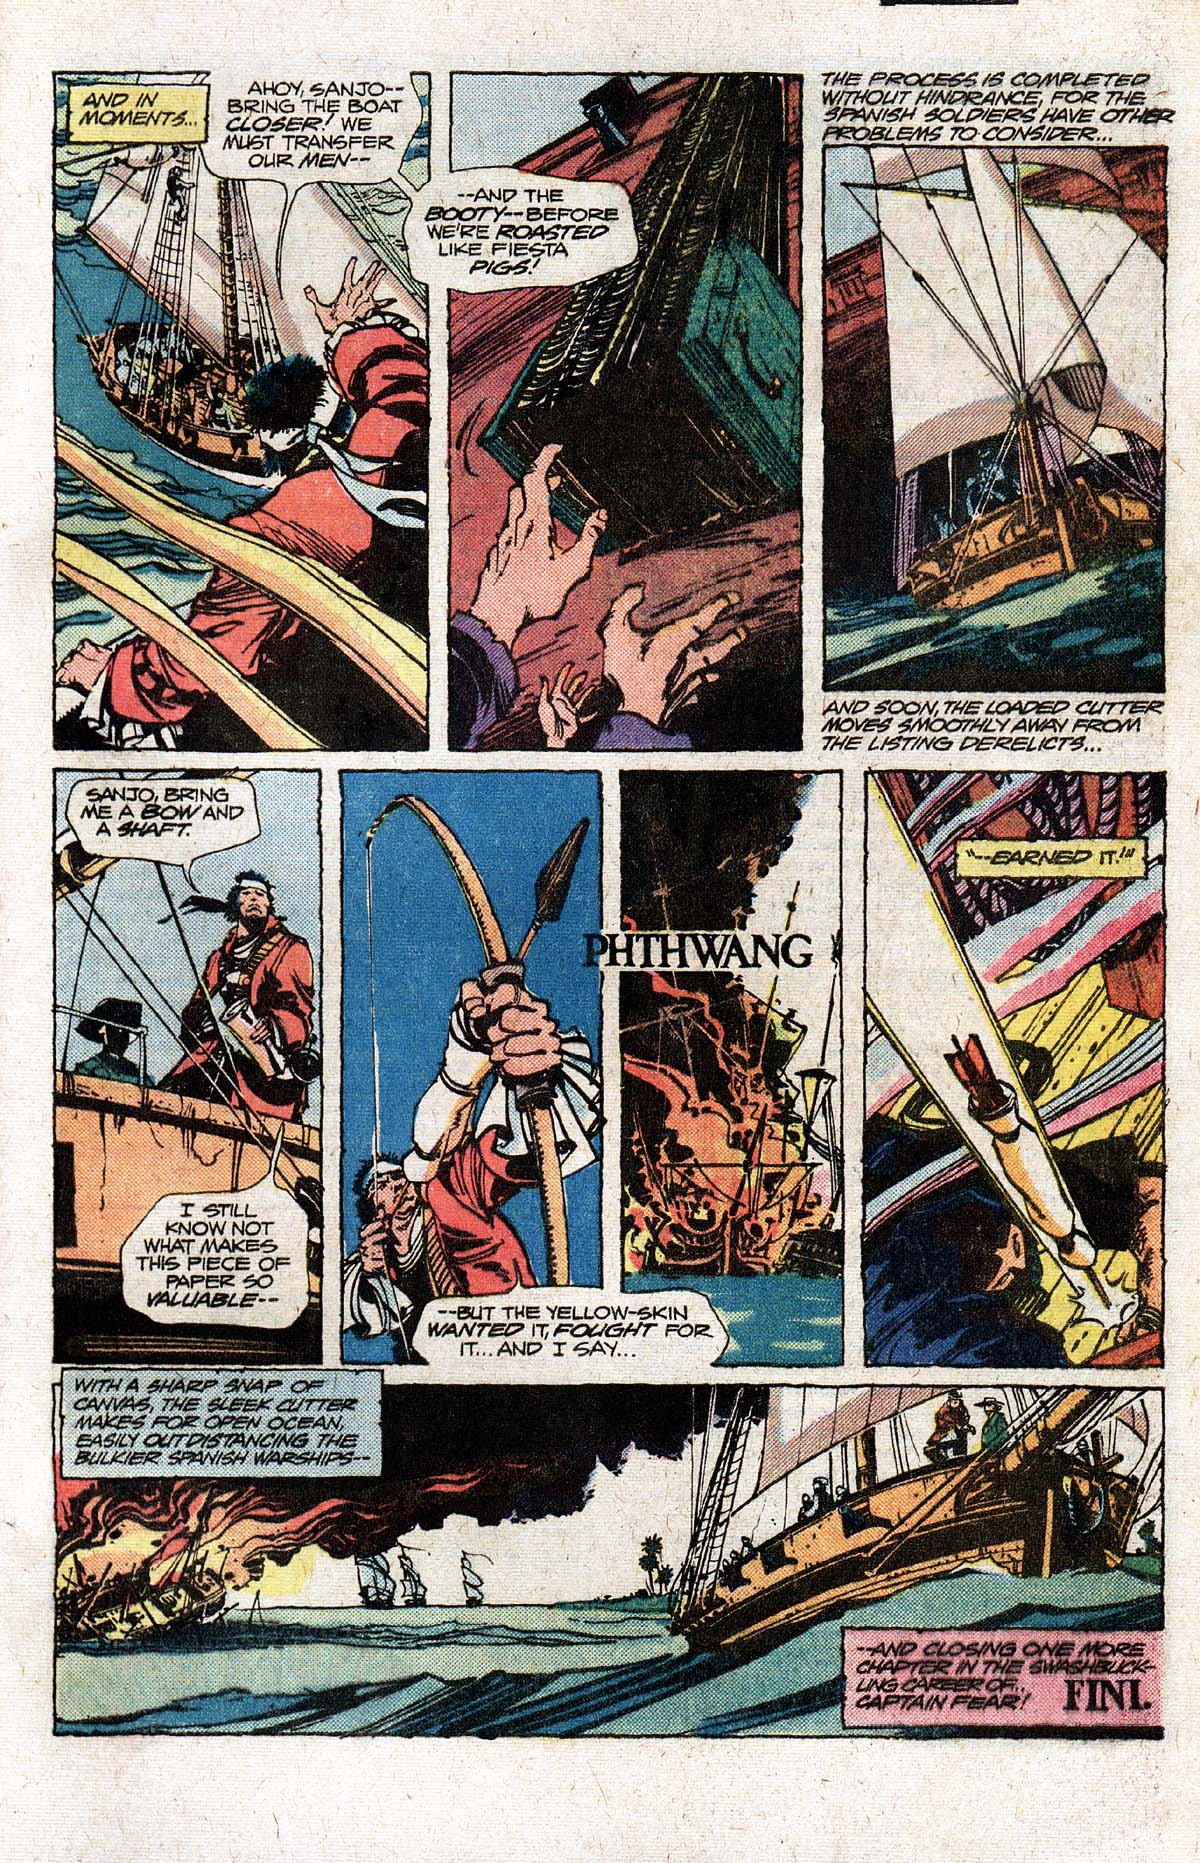 Unknown Soldier #256 (1981) by David Michelinie and Walt Simonson